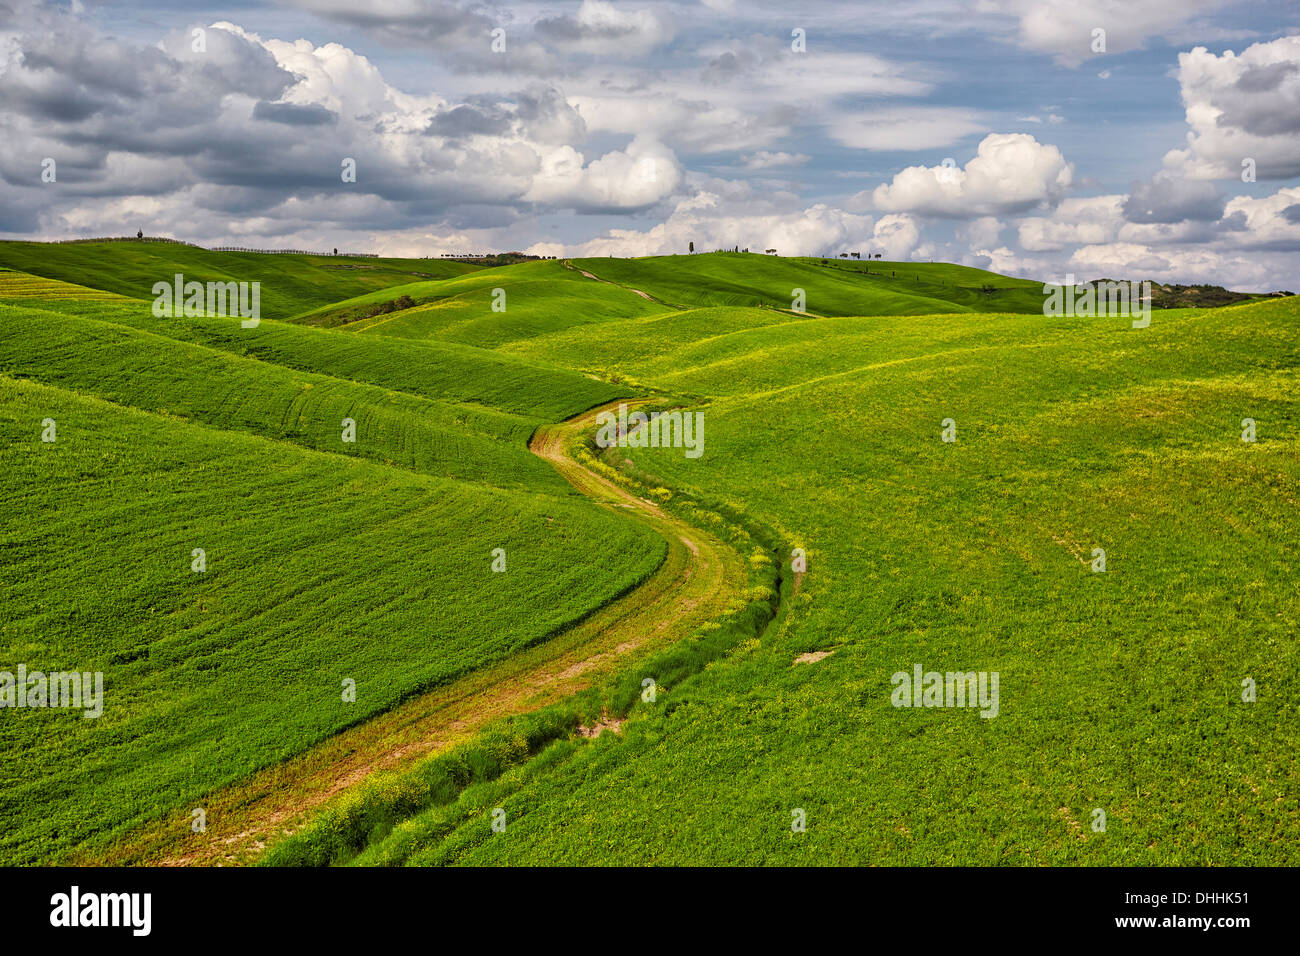 Hilly fields in the Crete Senesi region, Torrenieri, Montalcino, Province of Siena, Tuscany, Italy Stock Photo